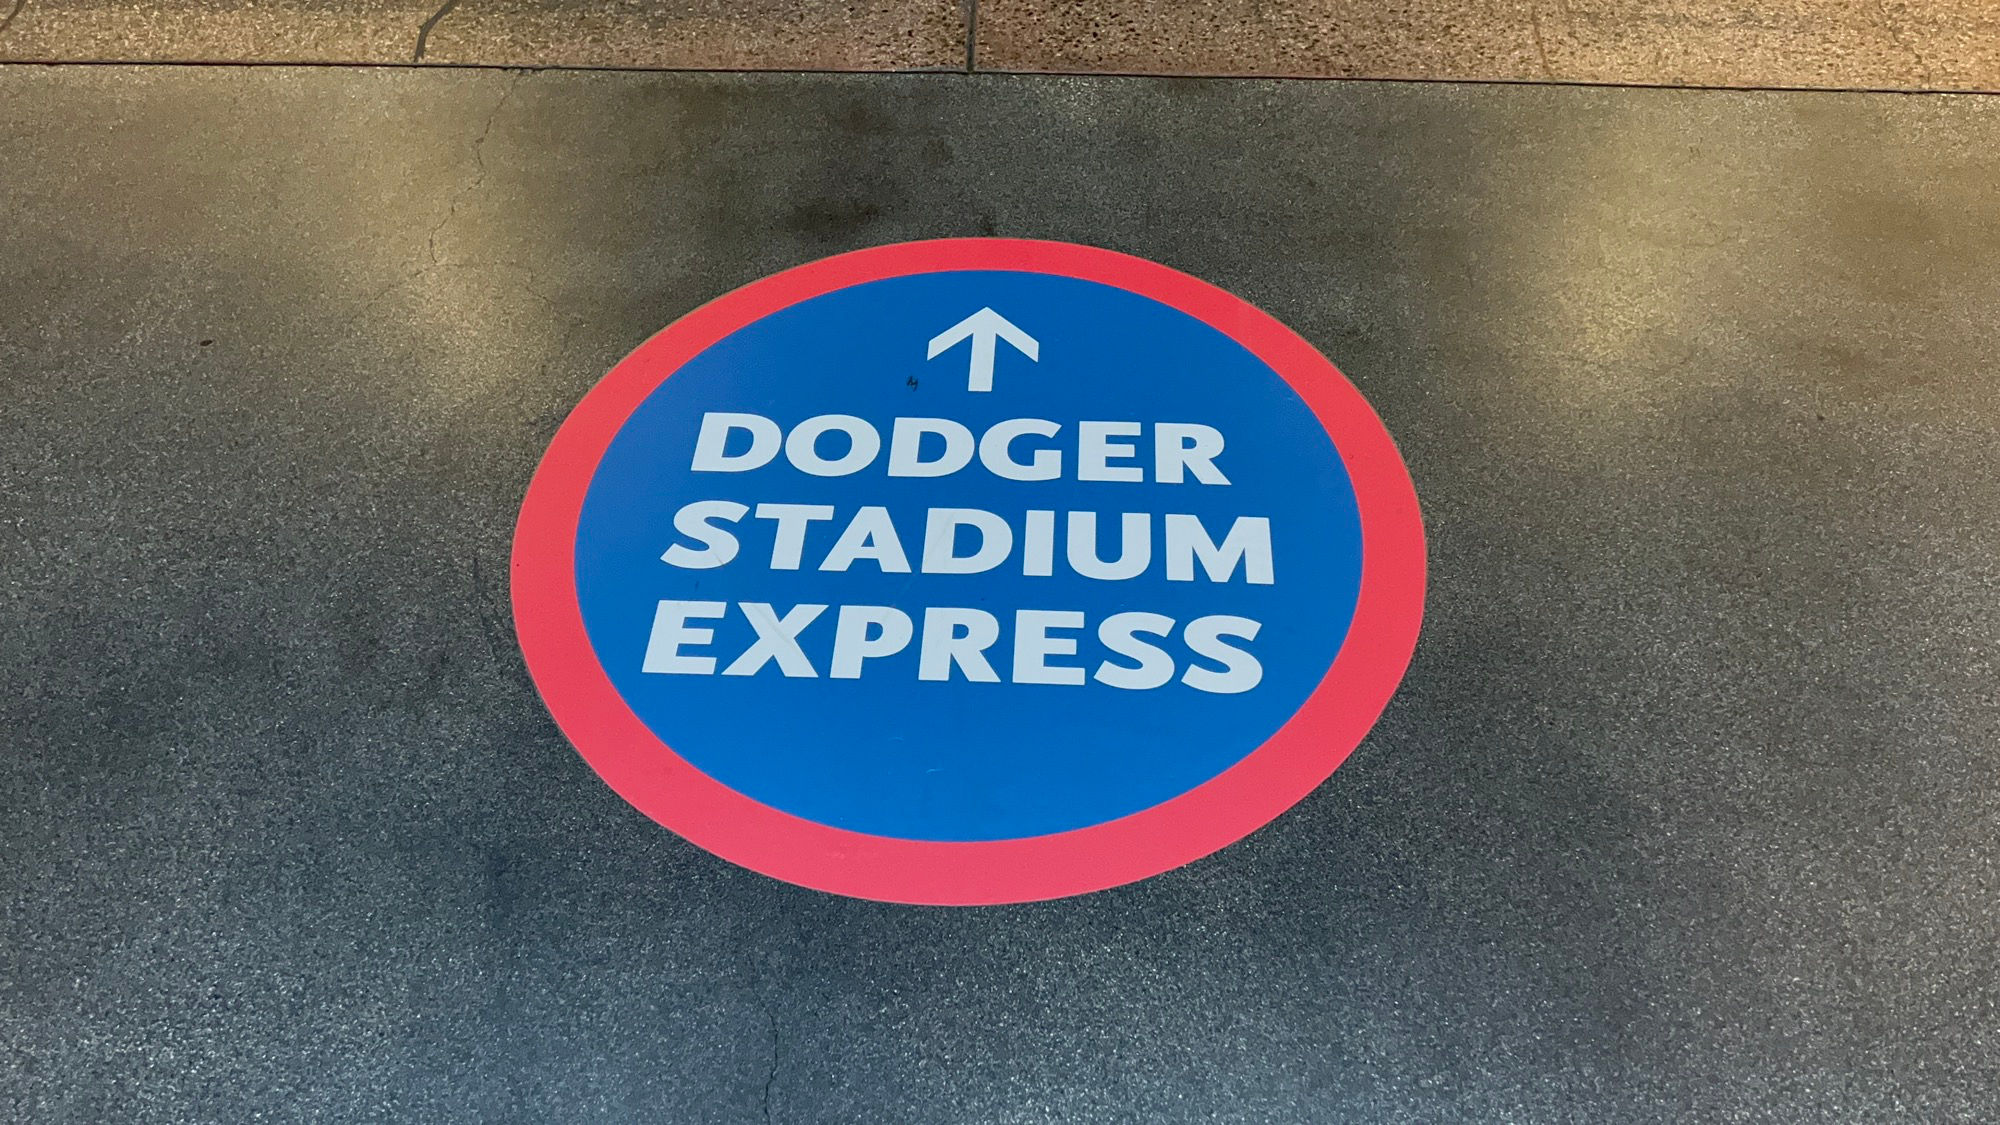 Dodger Stadium Express Union Station Signs